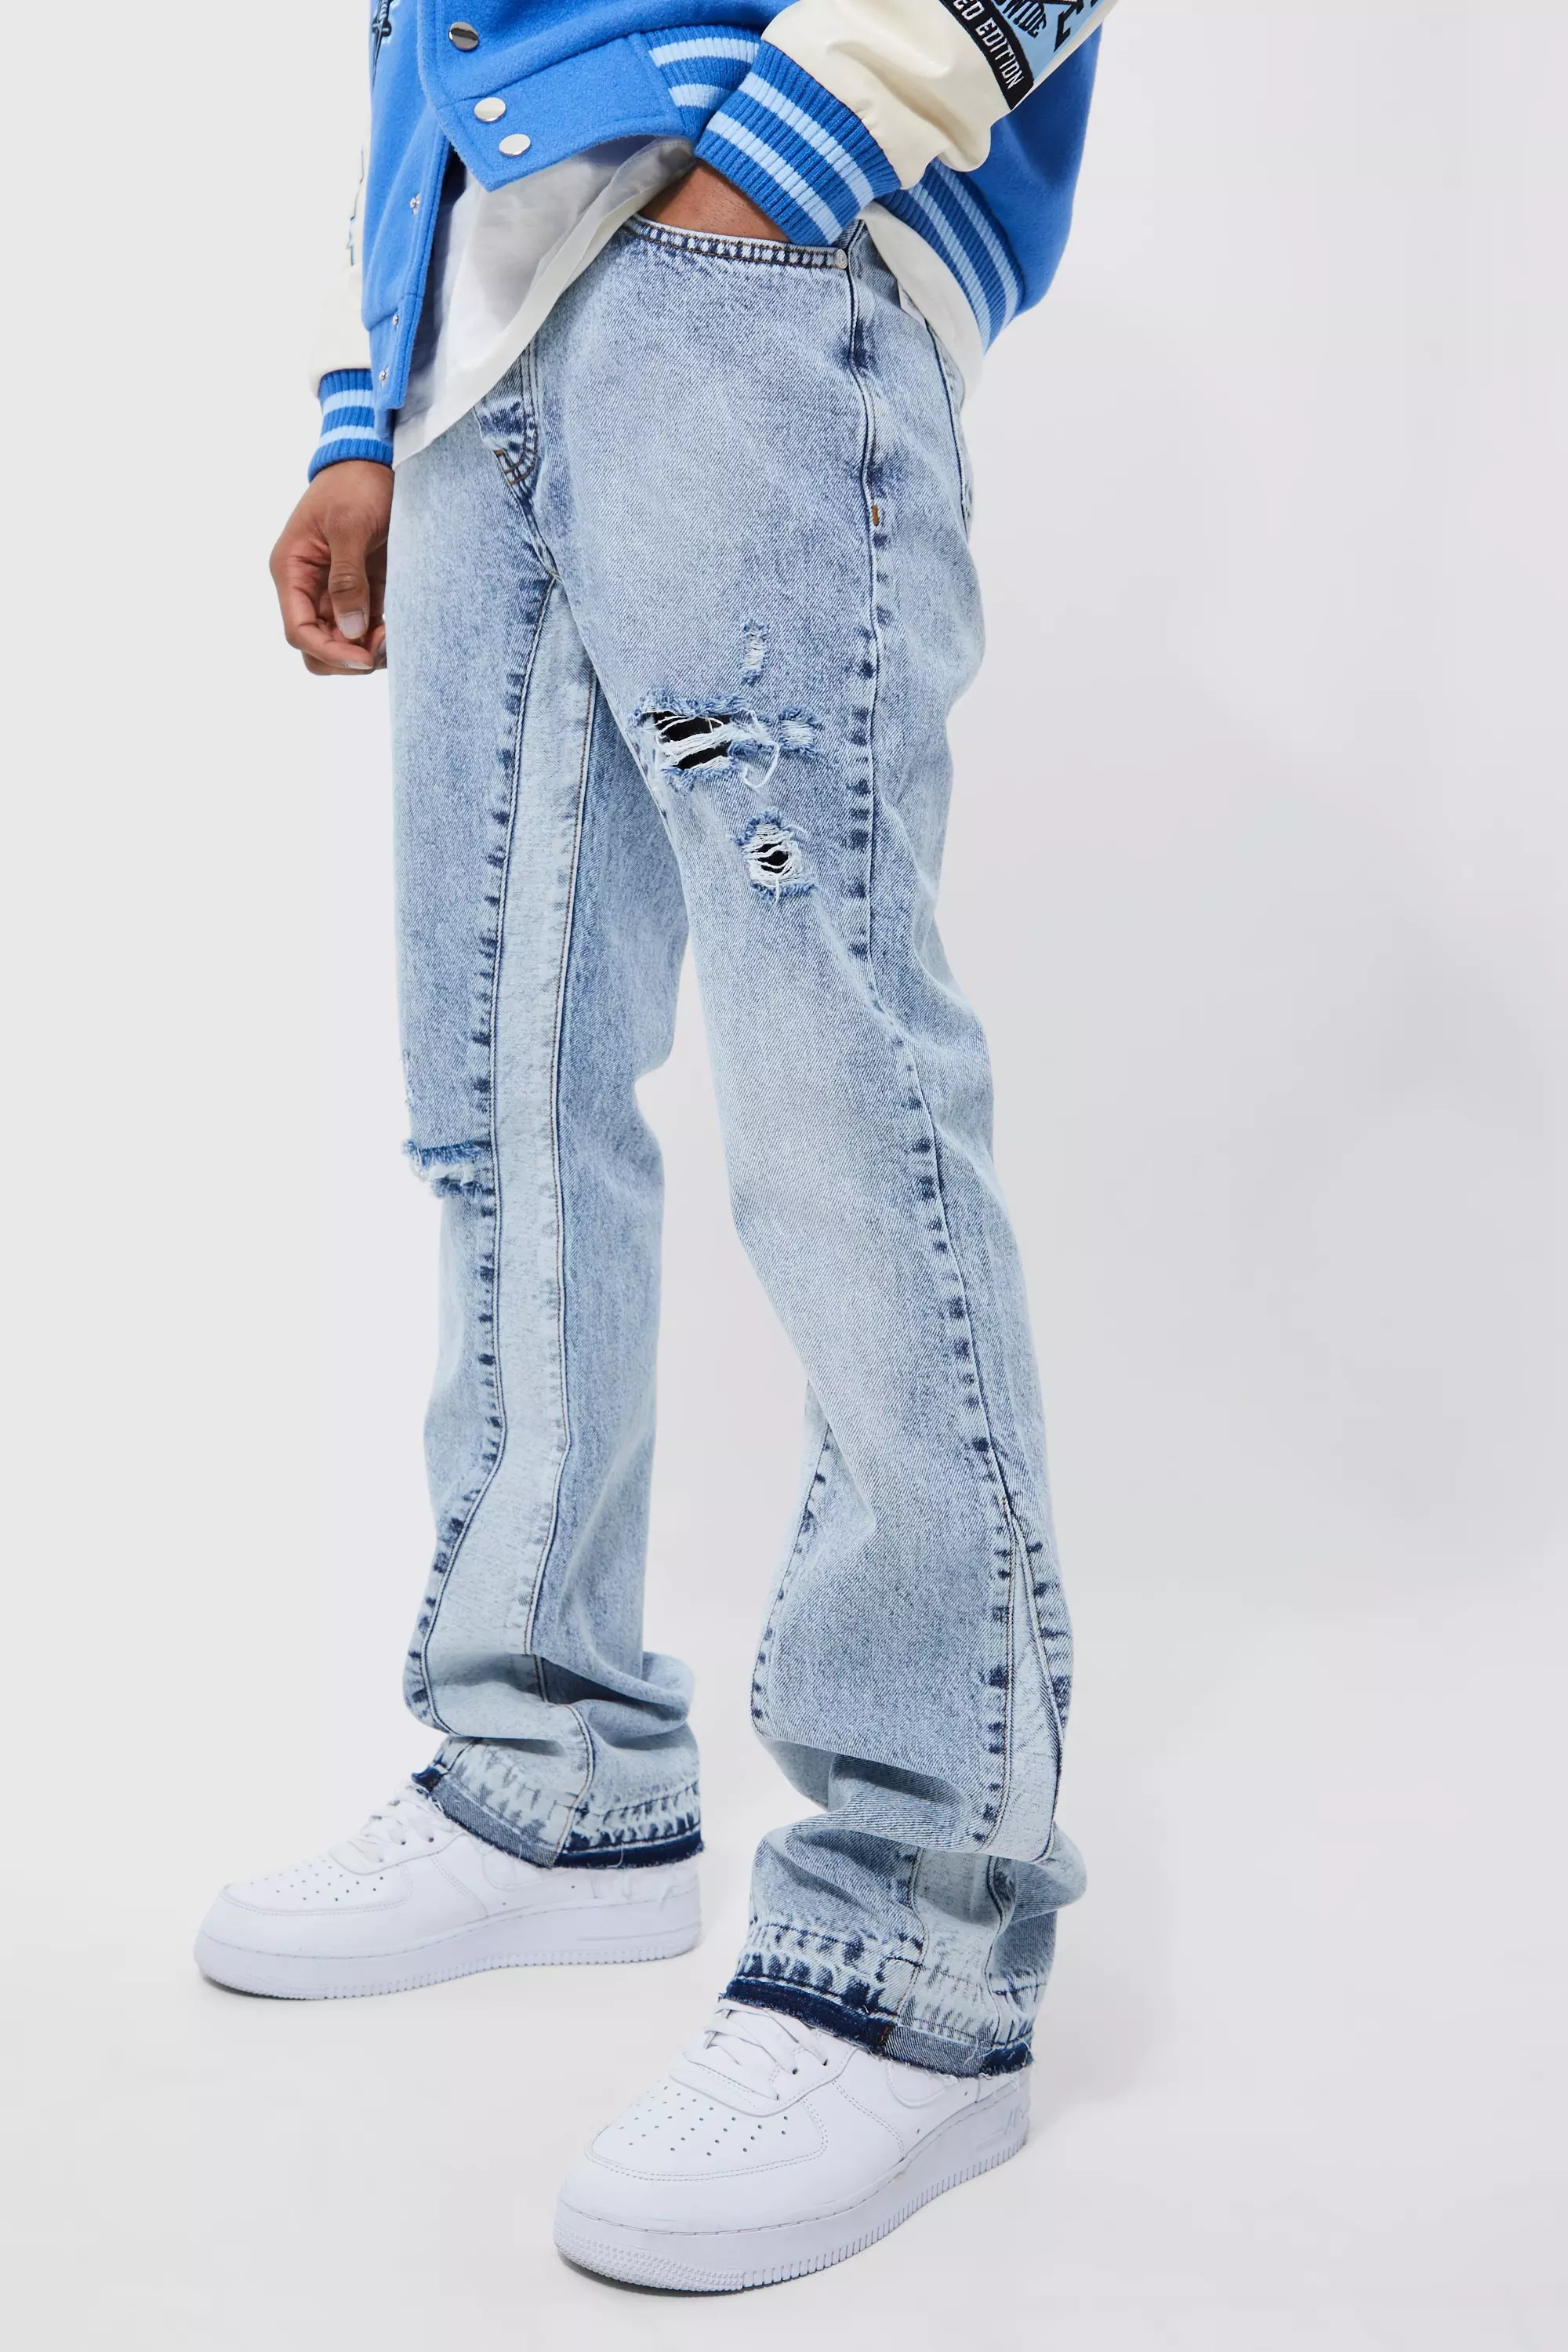 Blue Slim Flare Distressed Panel Jeans